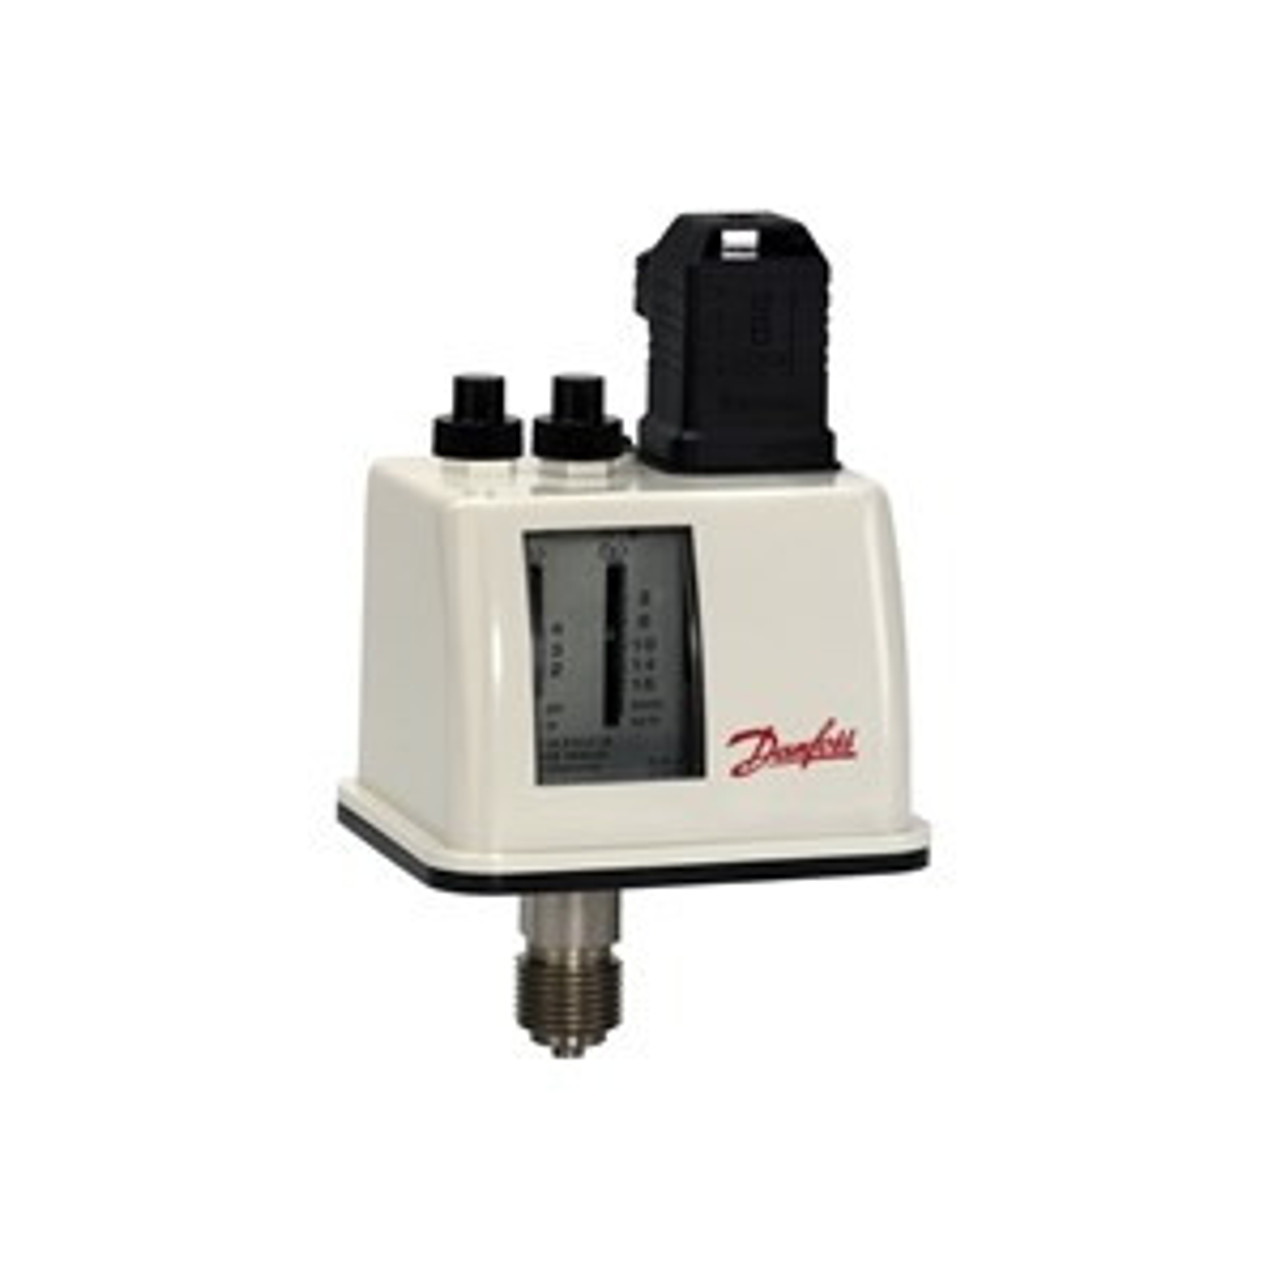 Danfoss MCP6H High pressure switches for boiler